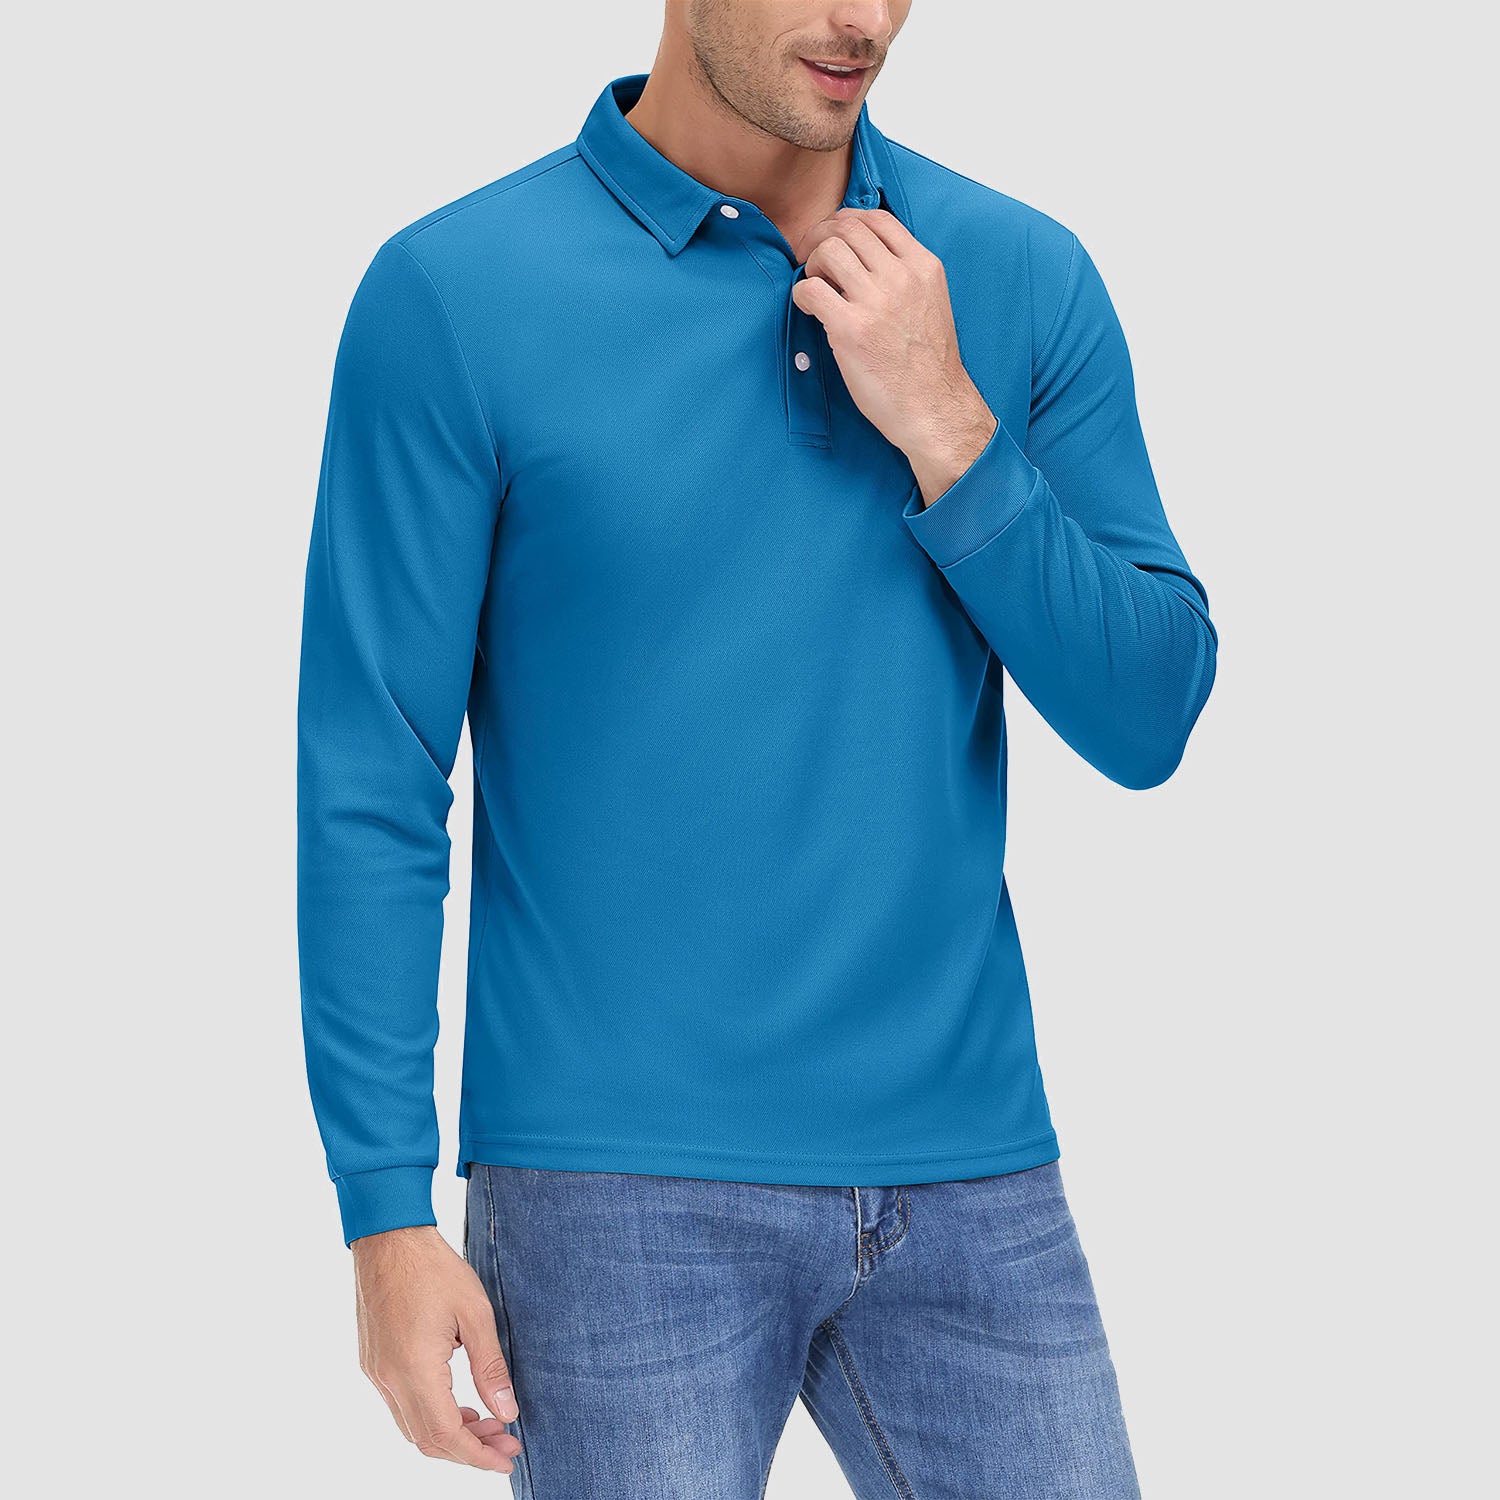 Men's Long Sleeve Polo Shirt Quick Dry Golf Shirt